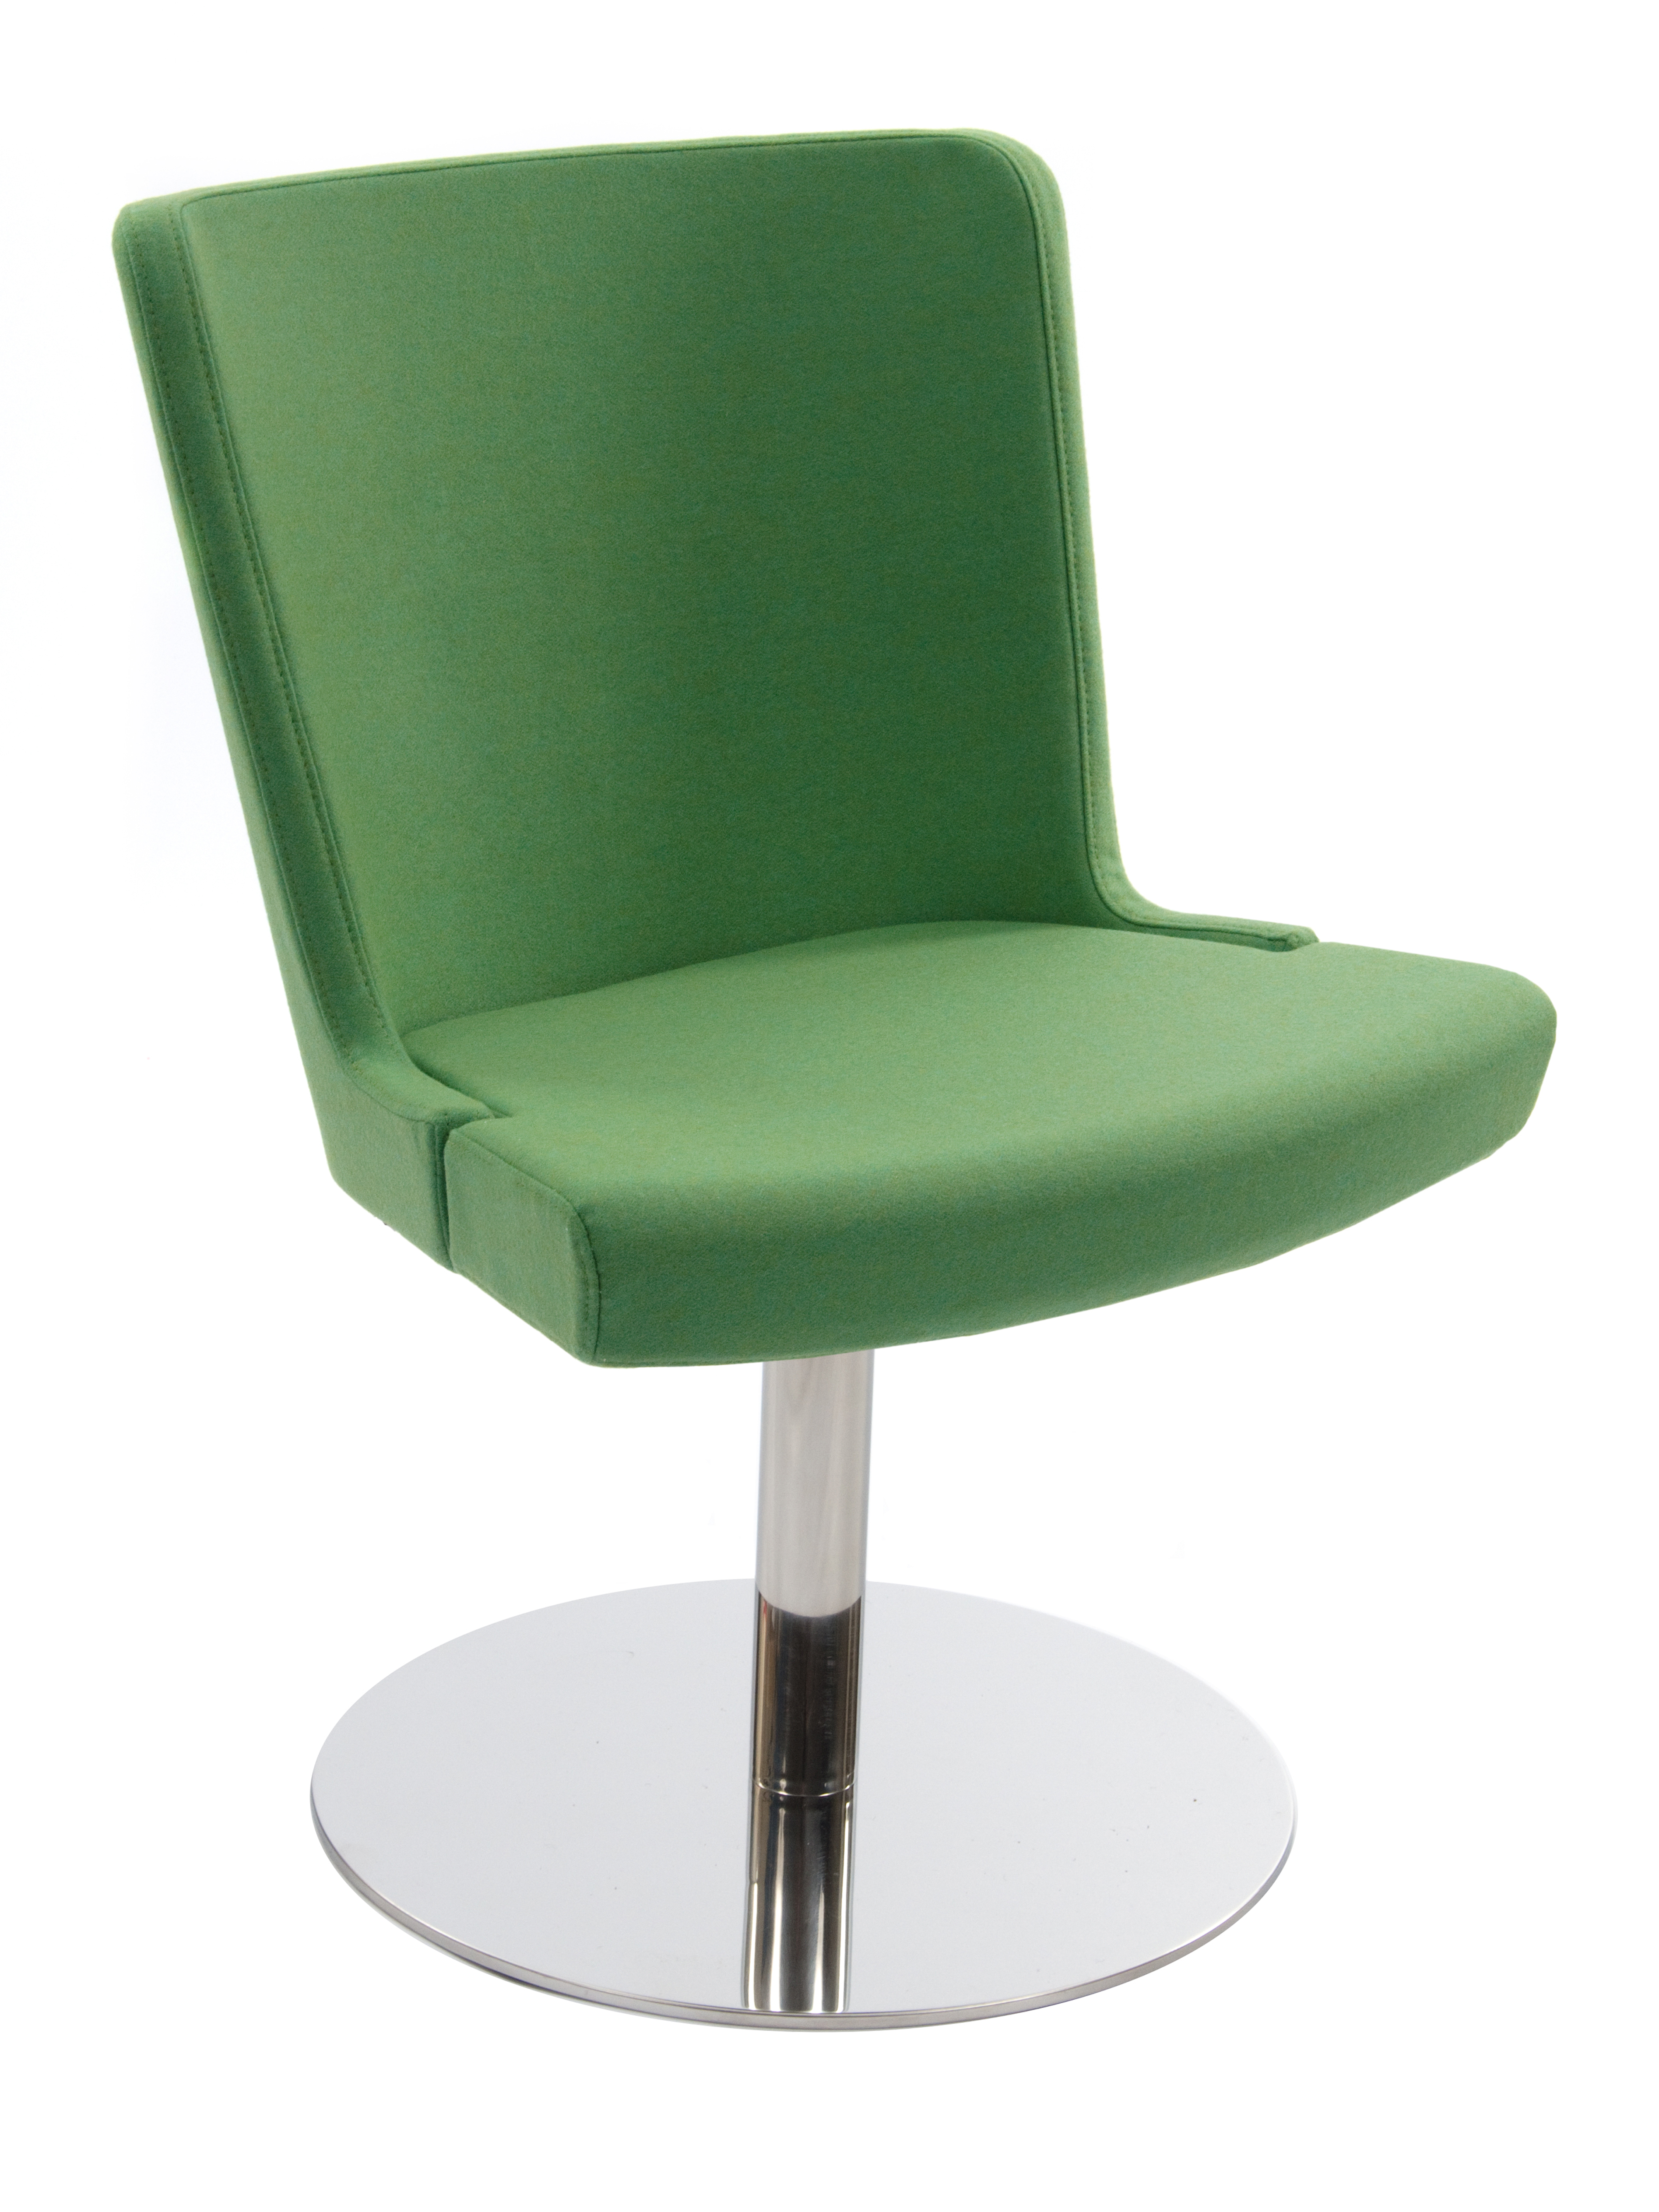 round swivel chair skapa round green side chair